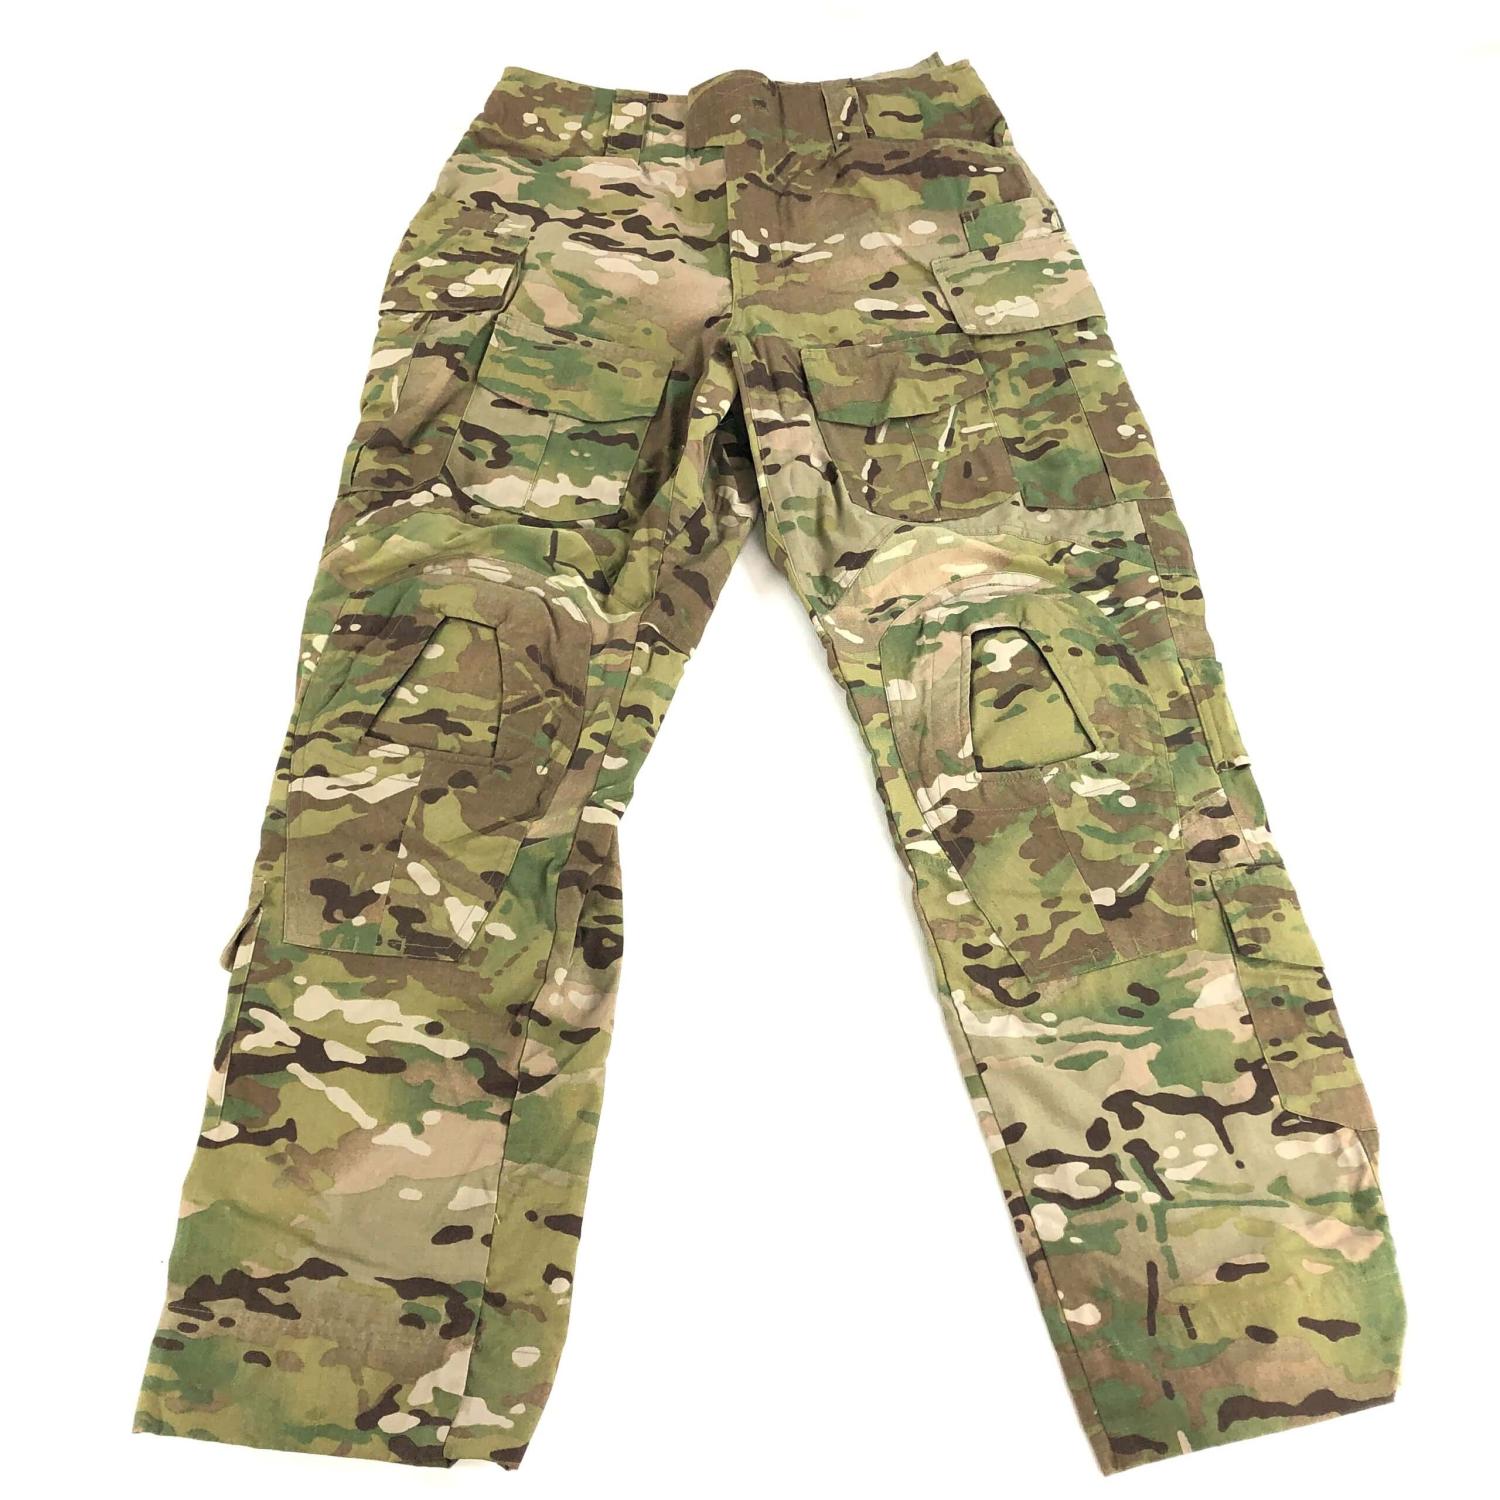 Тактические брюки Crye Precision G3 FR Combat Pants (Drifire) Multicam сукно hainsworth snooker precision 198 см оливковое 81 802 98 1